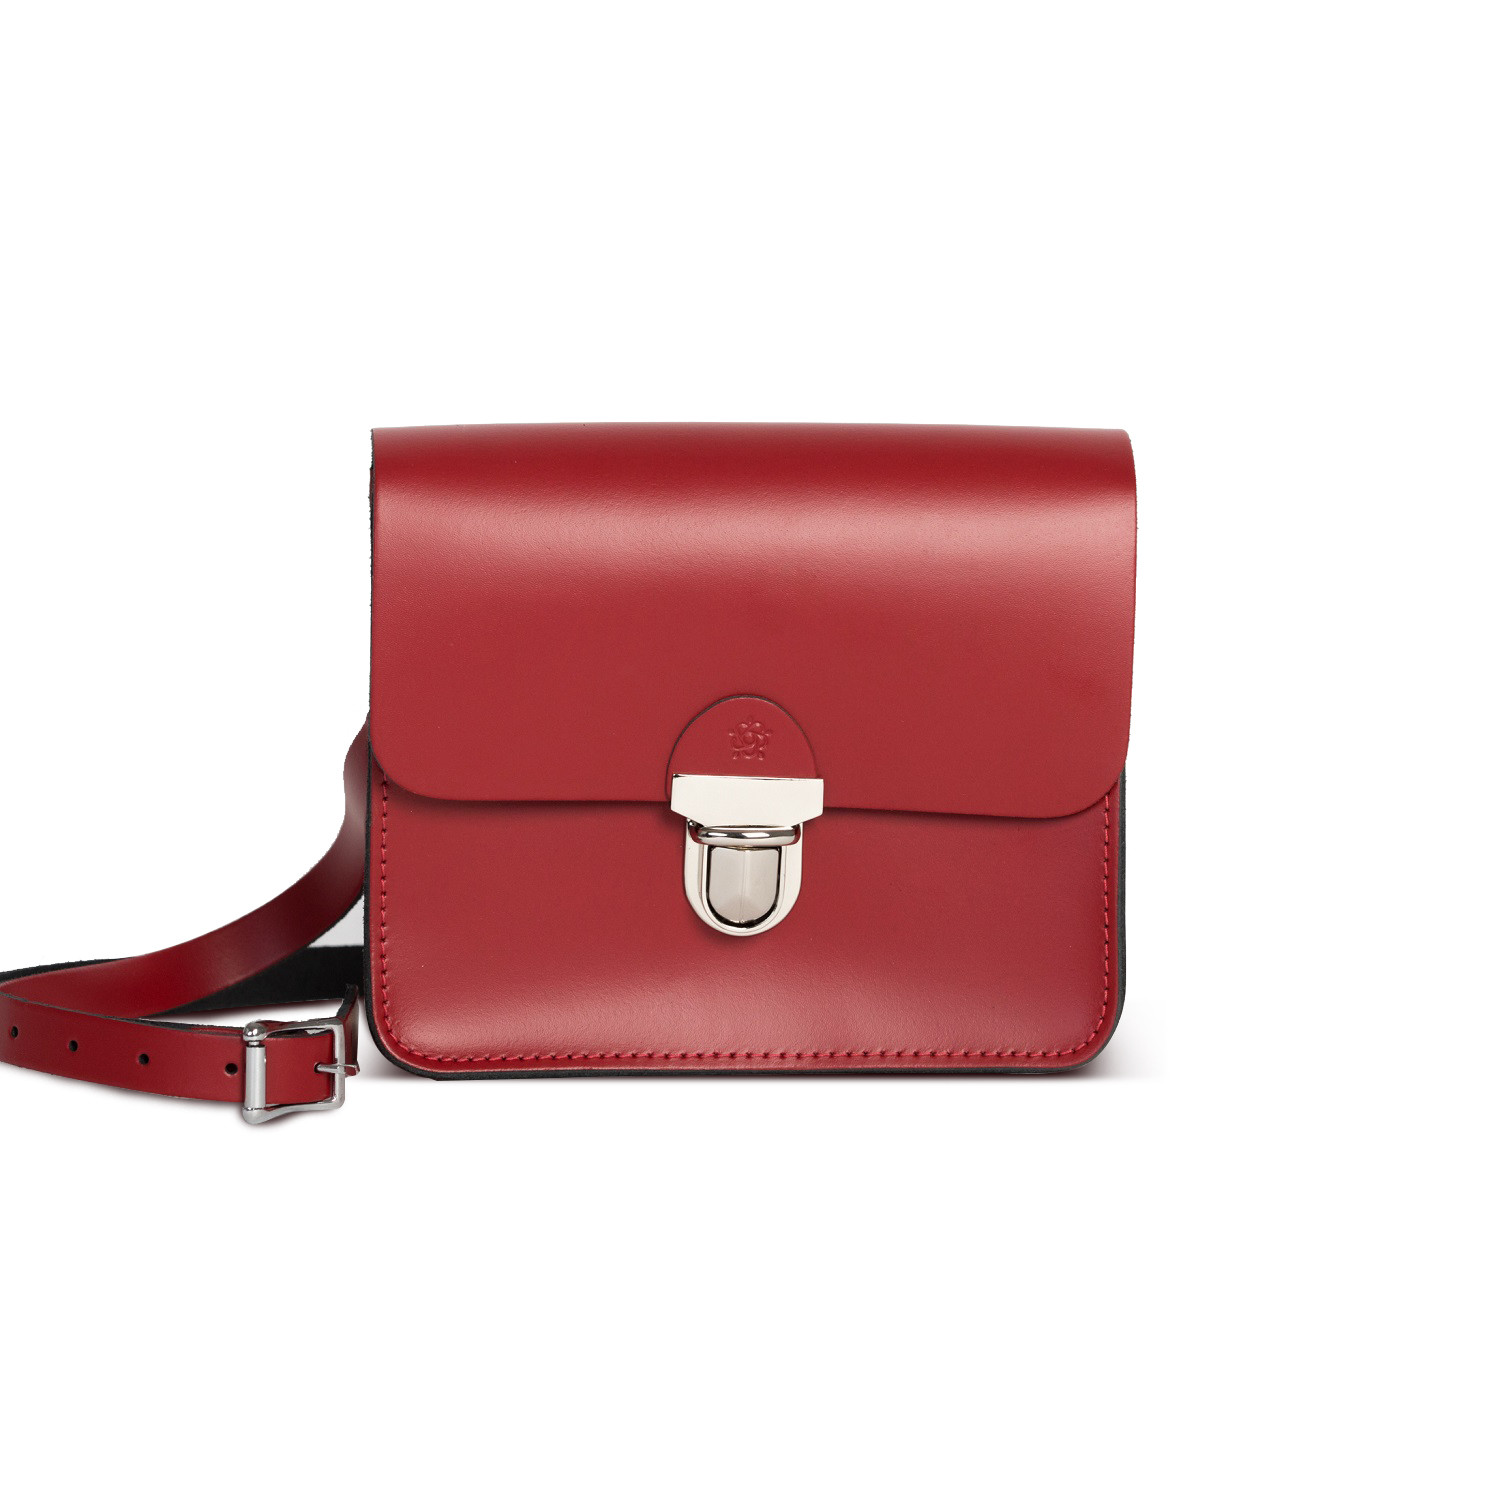 Sofia Premium Leather Crossbody Bag in Scarlet Red